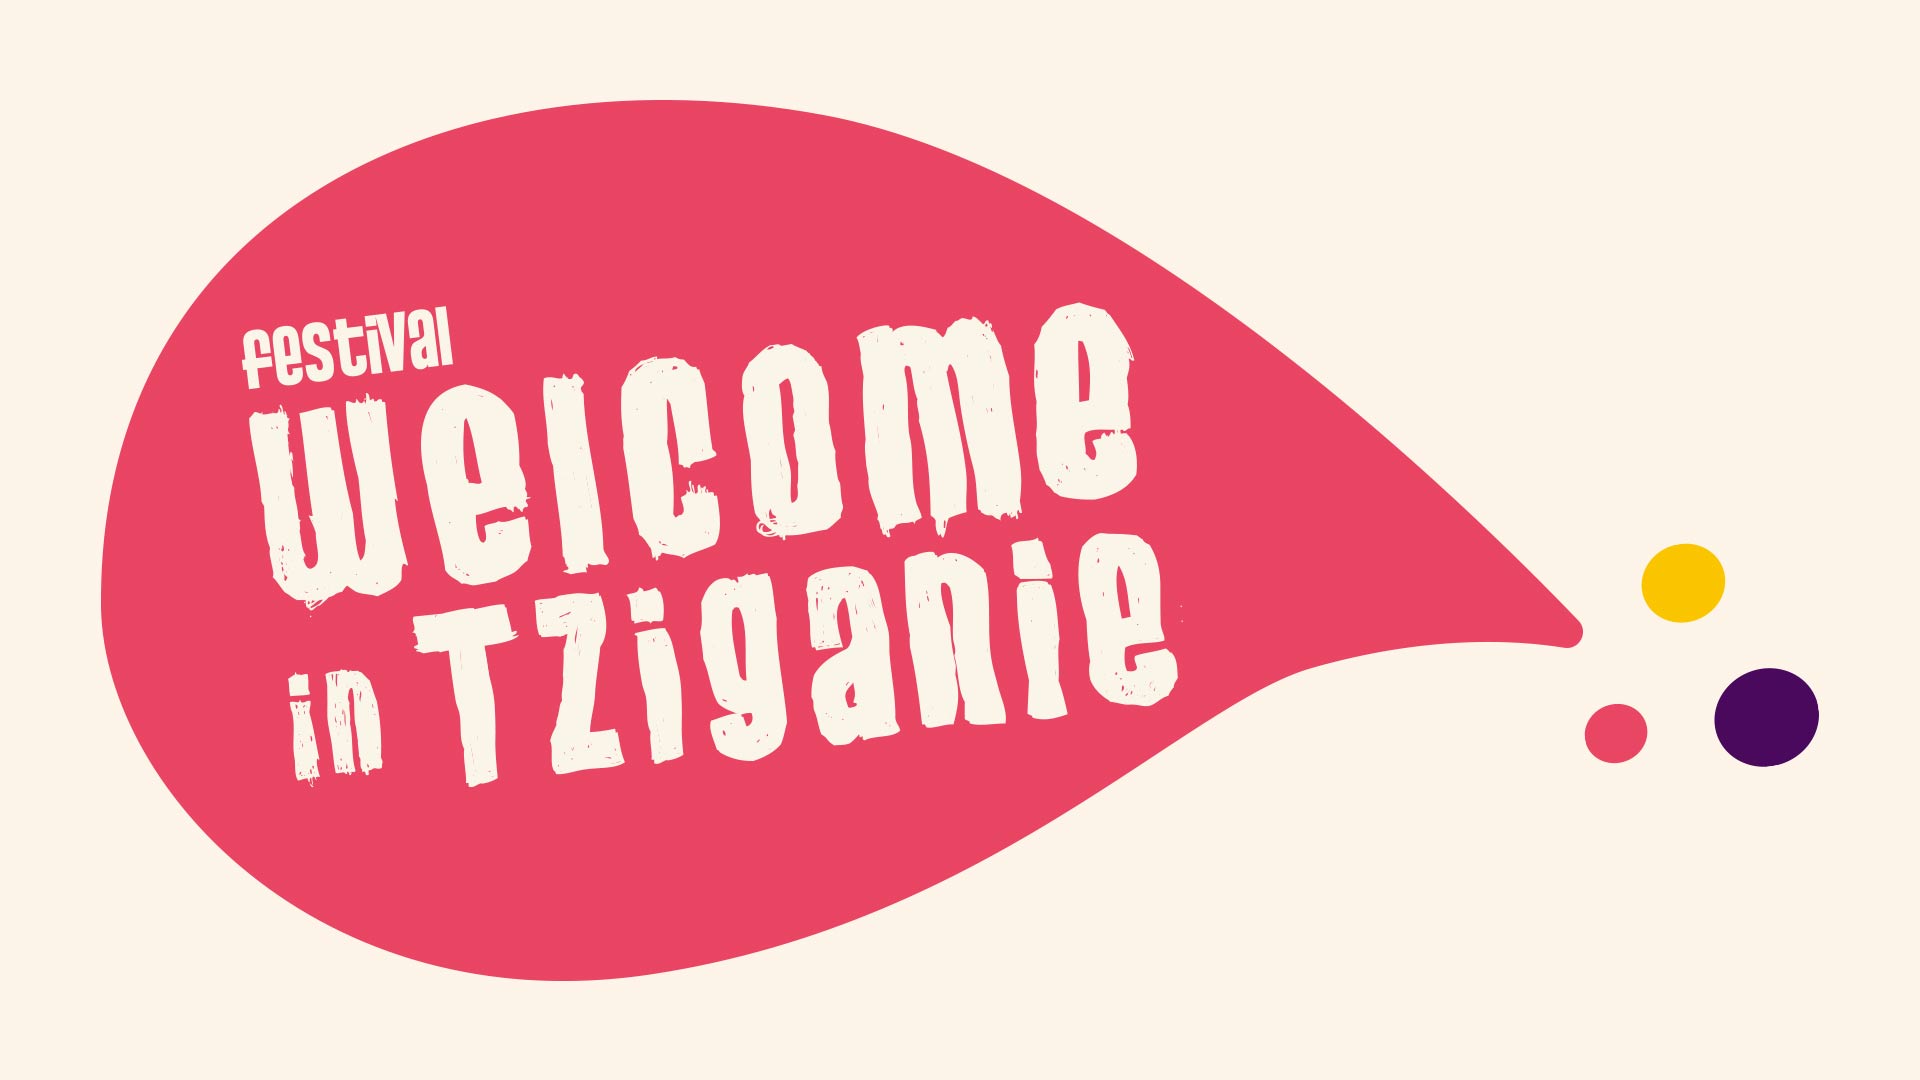 (c) Welcome-in-tziganie.com